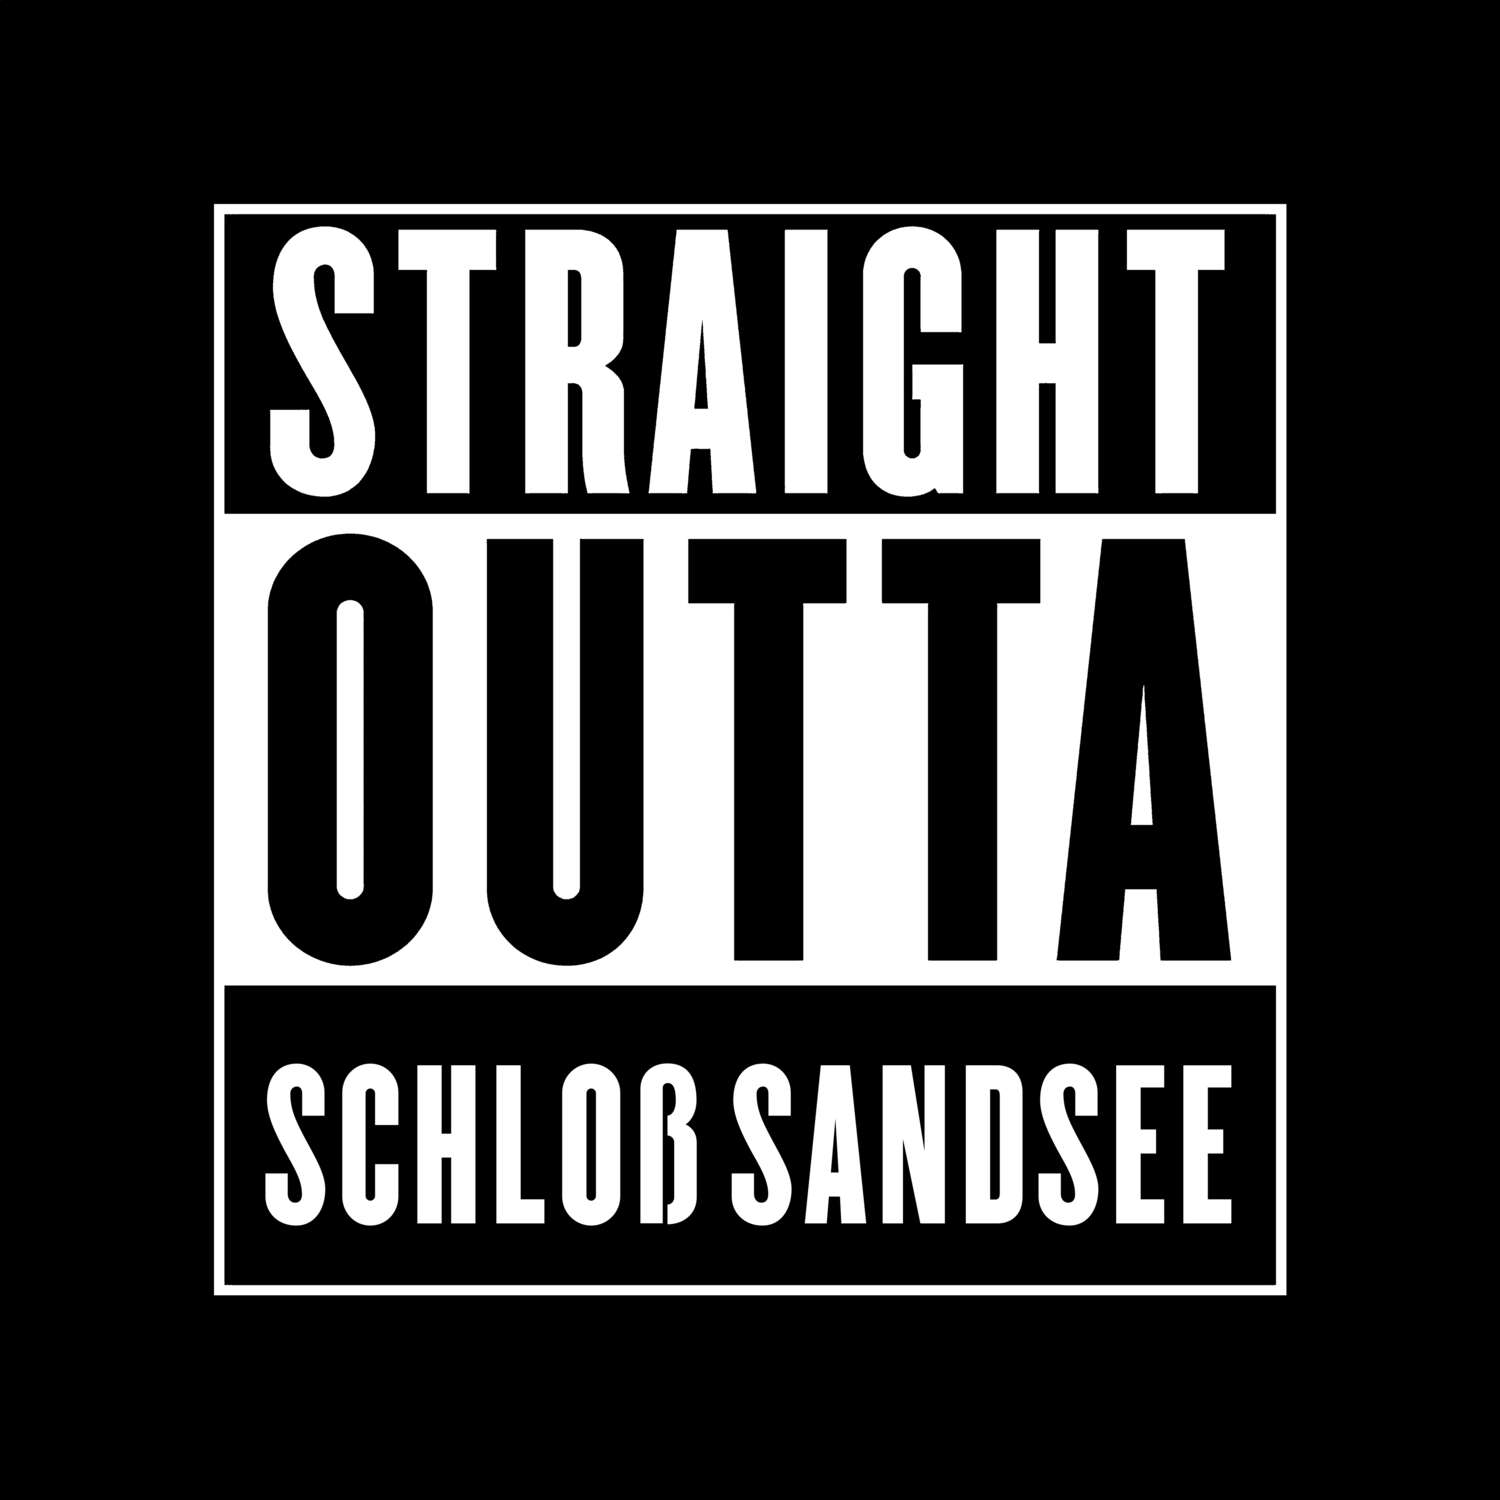 Schloß Sandsee T-Shirt »Straight Outta«